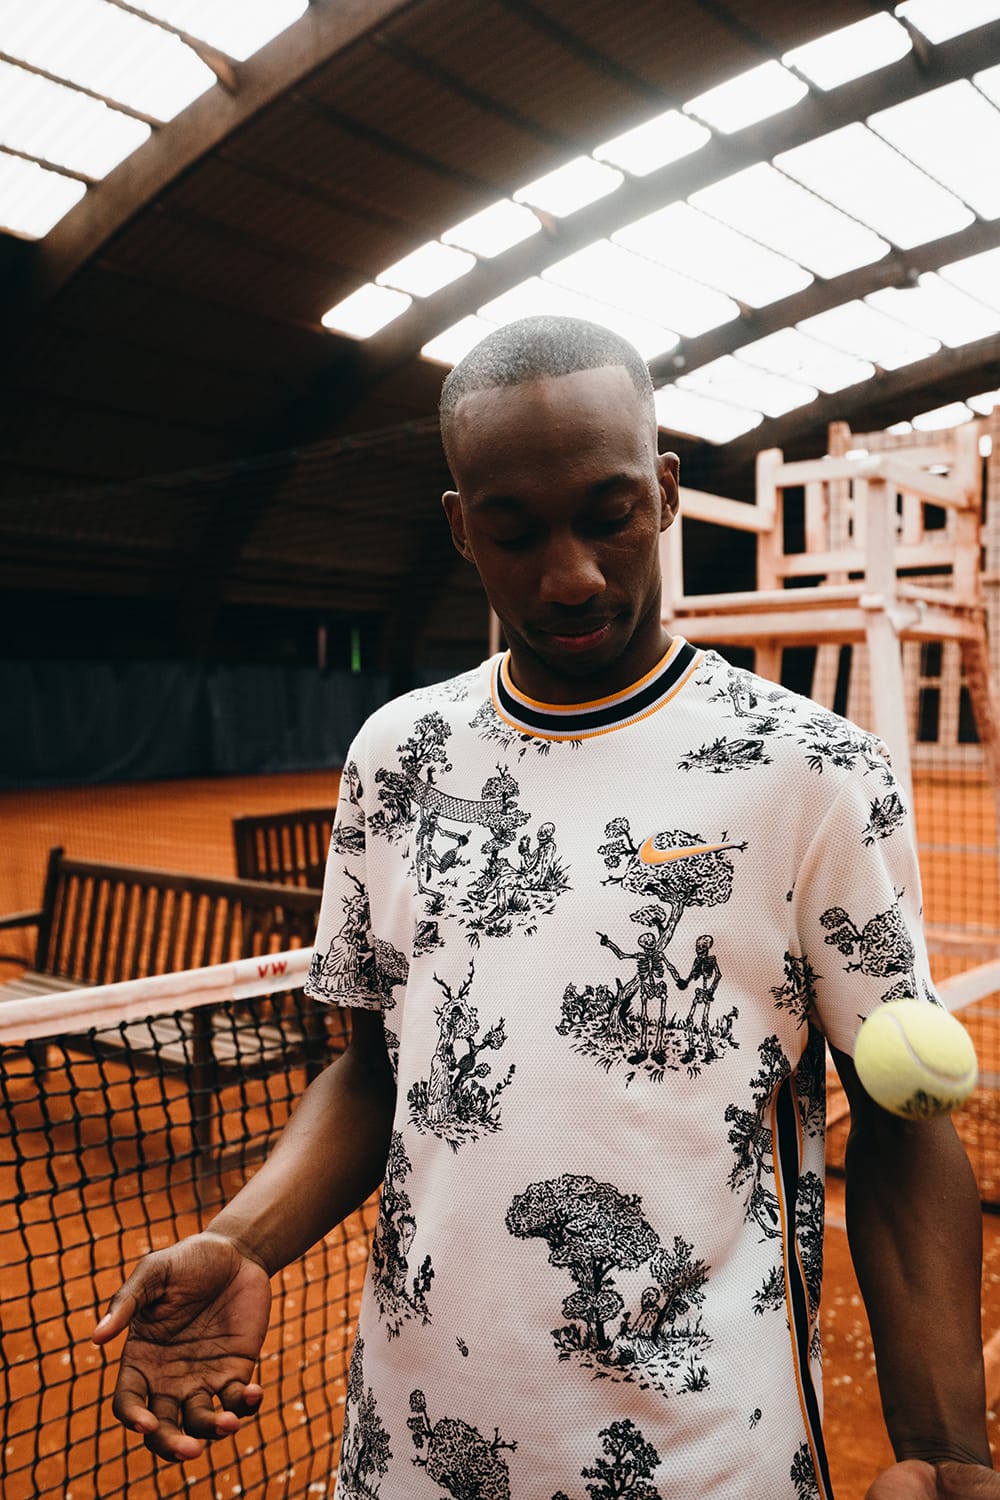 nike tennis clothing 2019